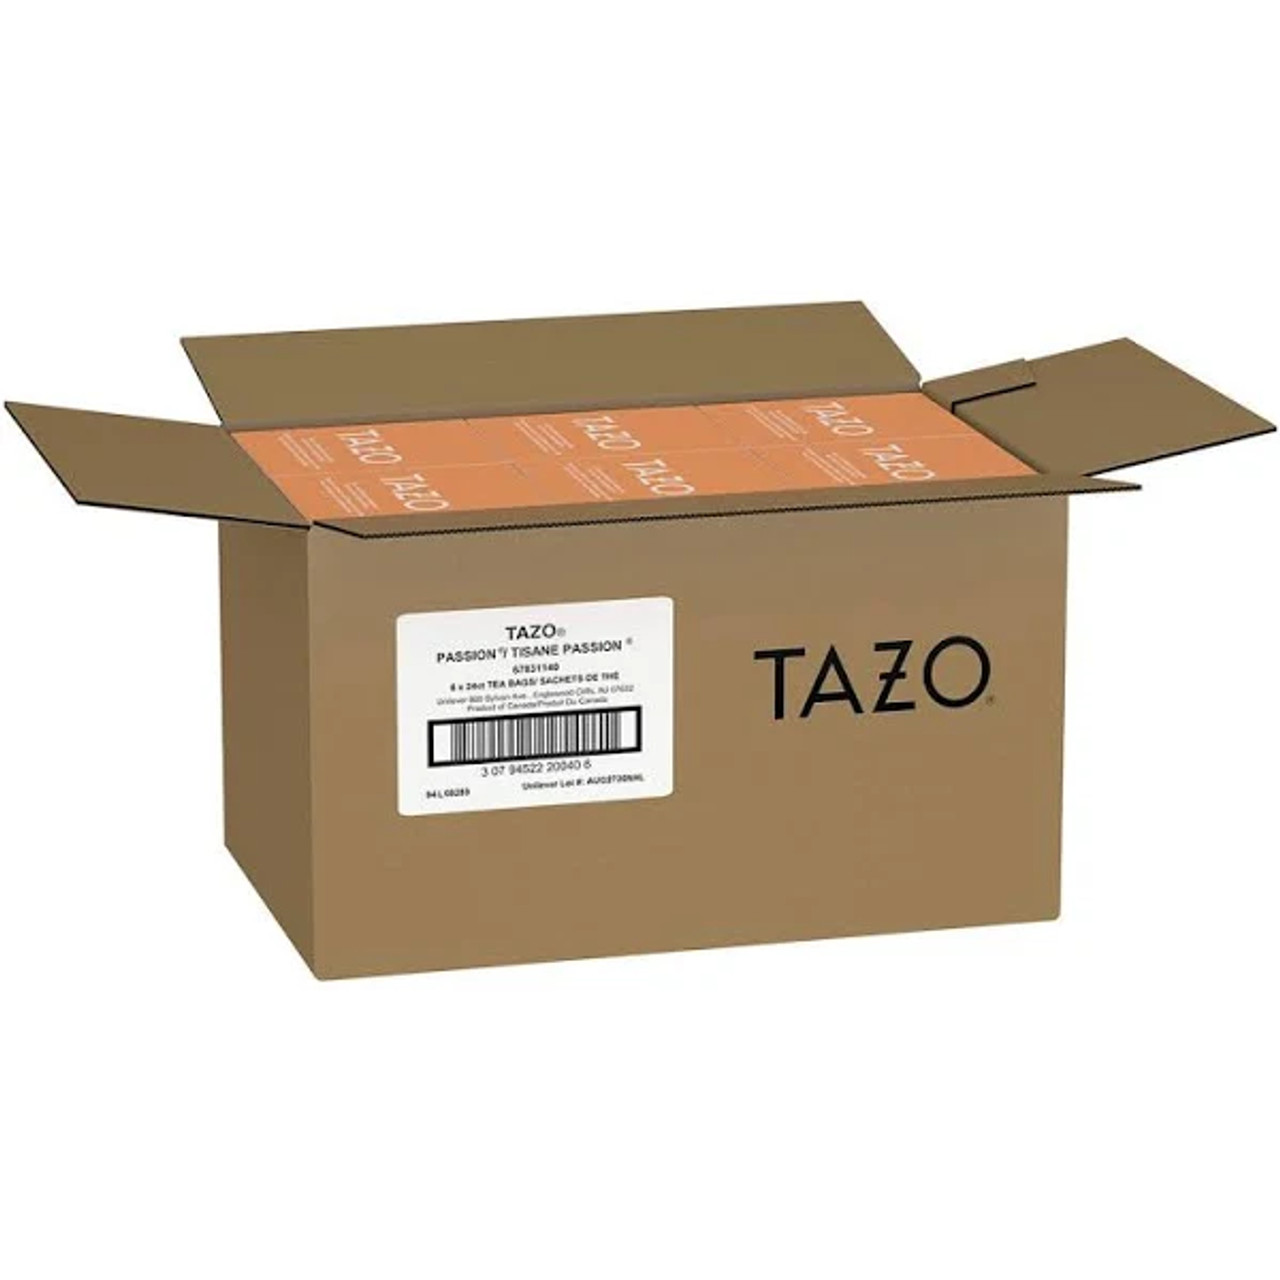 TAZO Passion Tea Bags | 20UN/Unit, 6 Units/Case